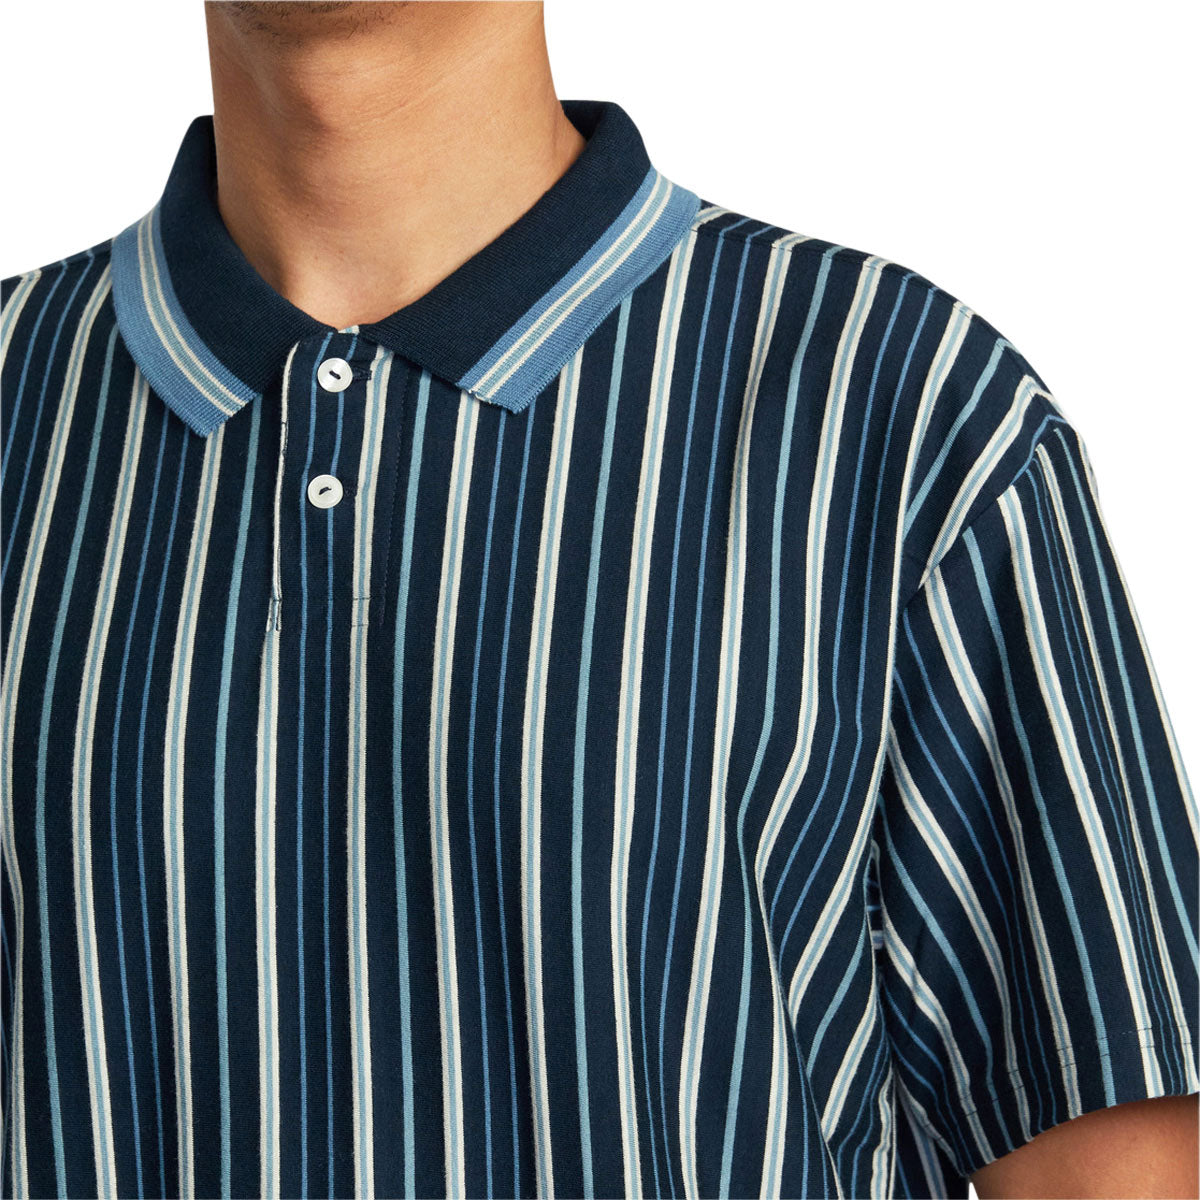 RVCA Uptown Stripe Polo Shirt - Moody Blue image 4